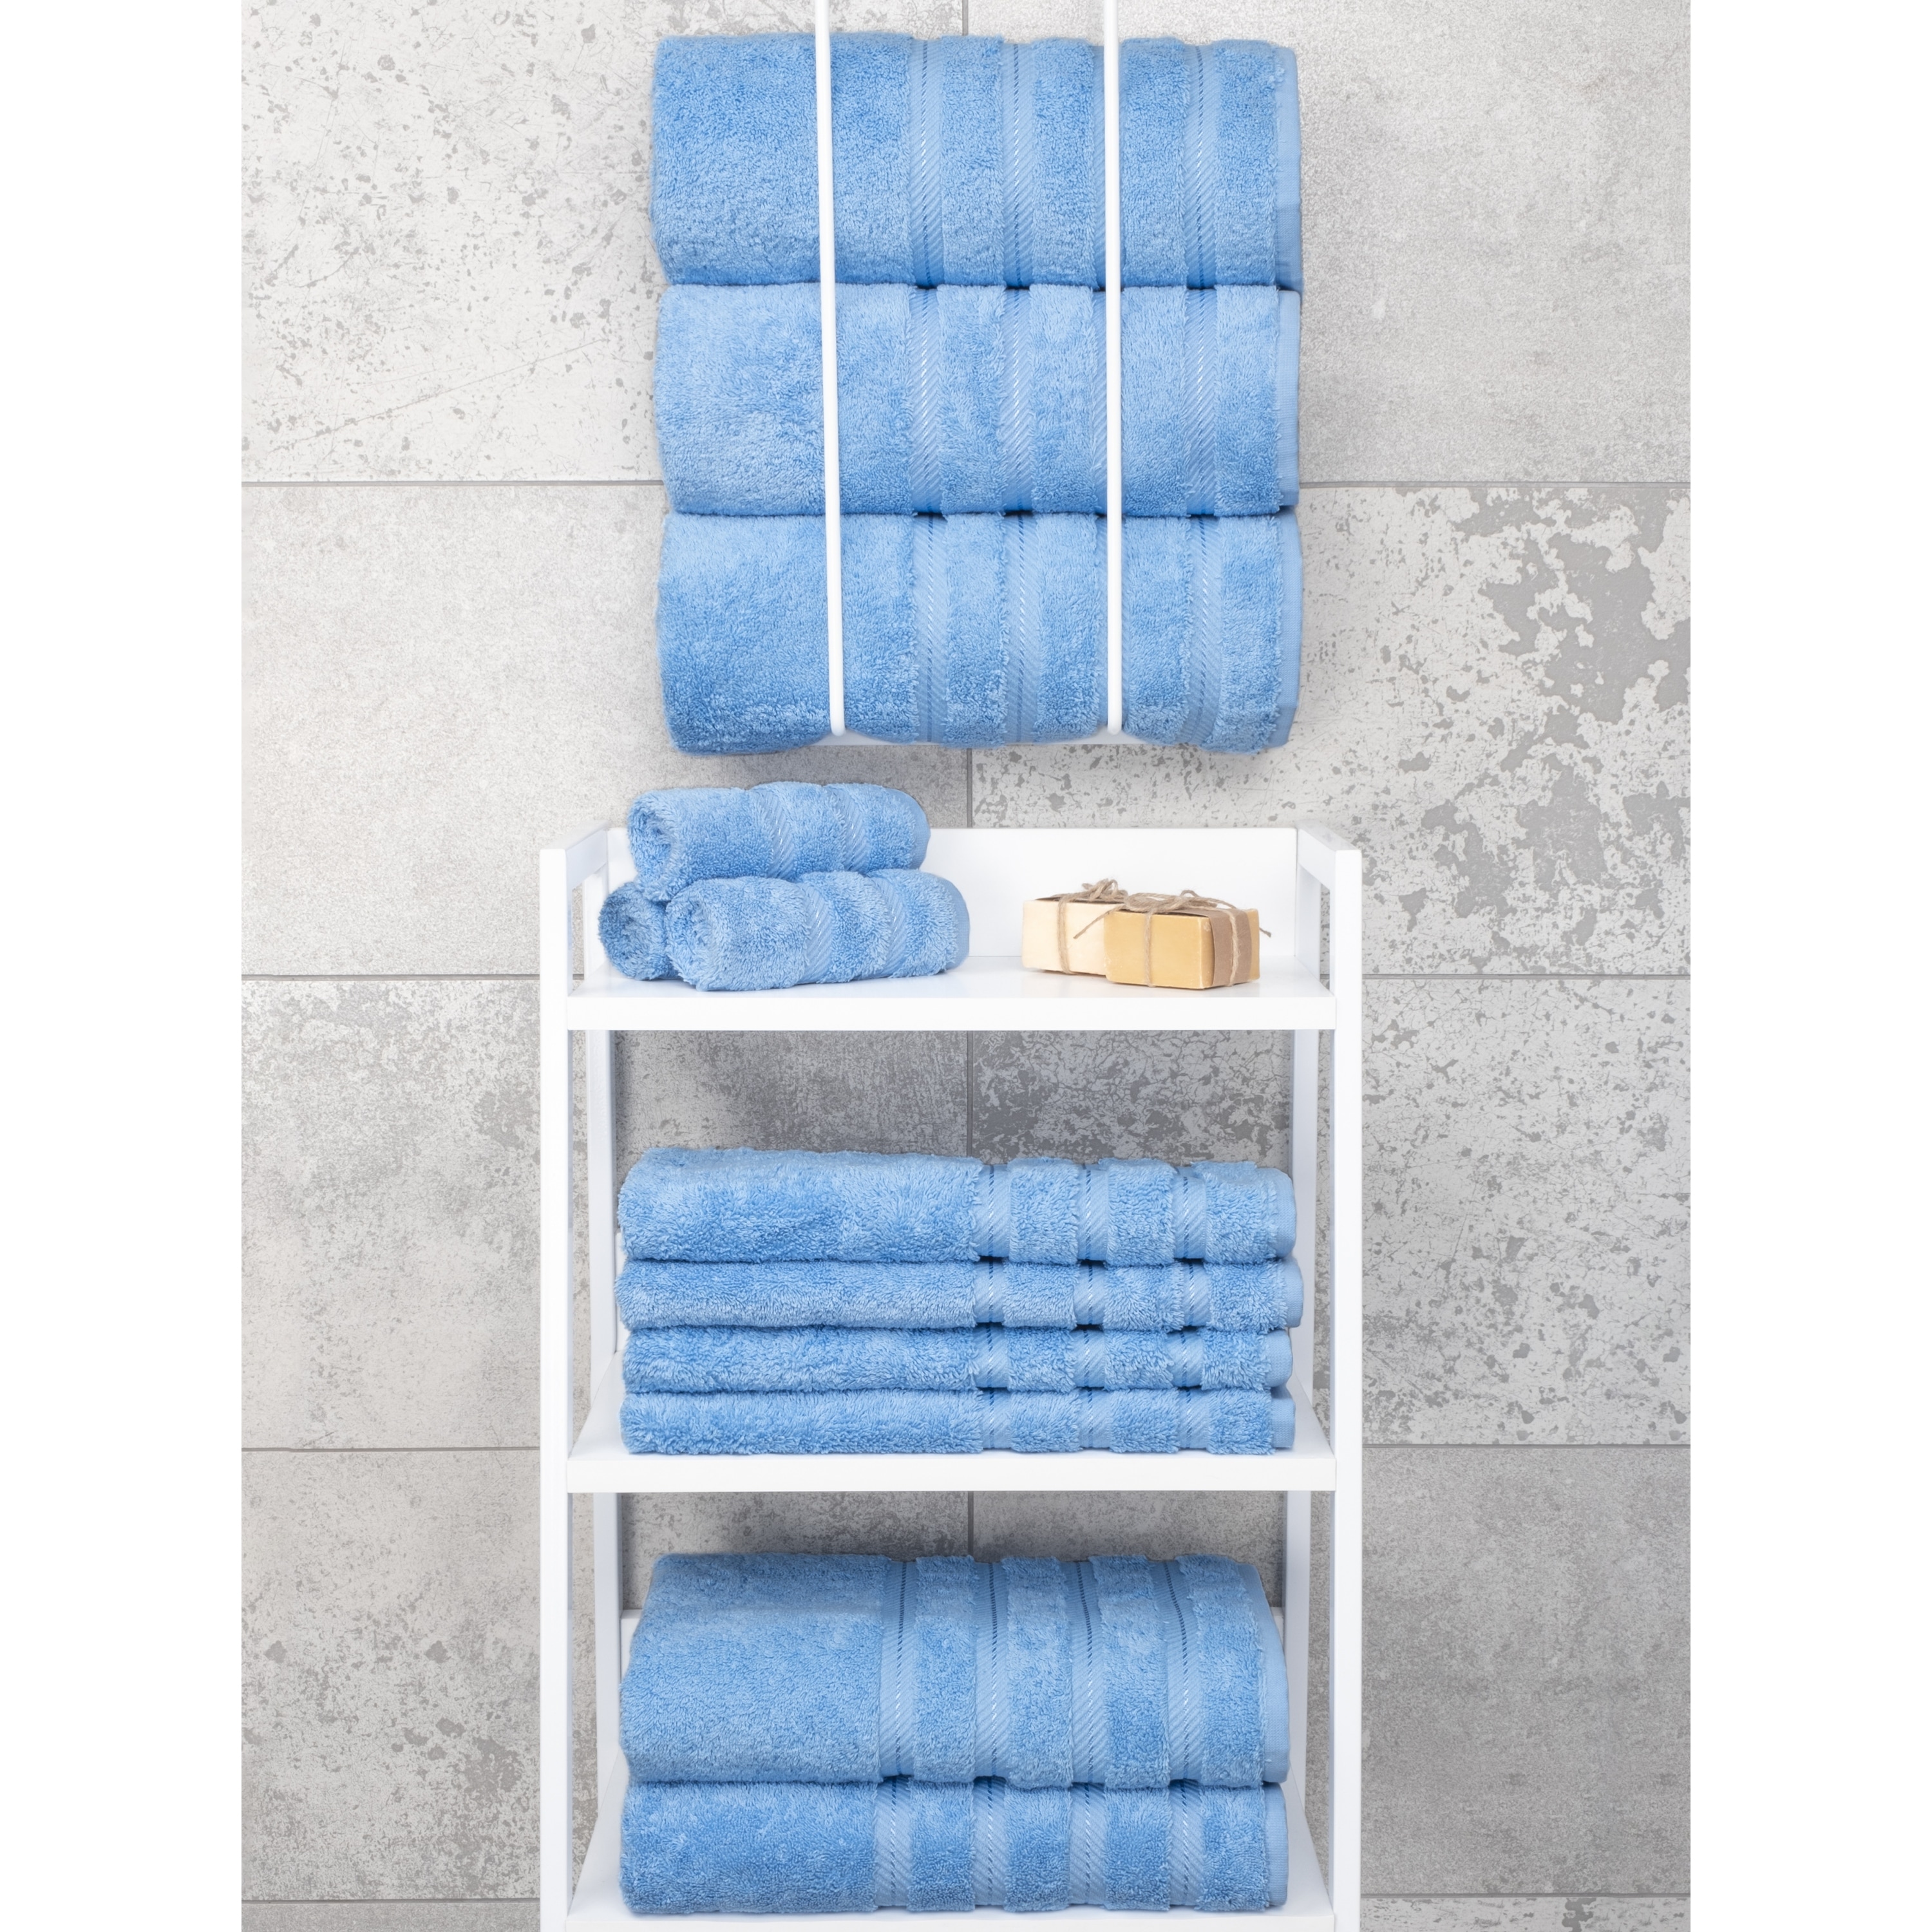 https://ak1.ostkcdn.com/images/products/is/images/direct/37e1641f288ca352b2dbabc627a6bbed9c3620ce/American-Soft-Linen-Turkish-Cotton-4-Piece-Bath-Towel-Set.jpg